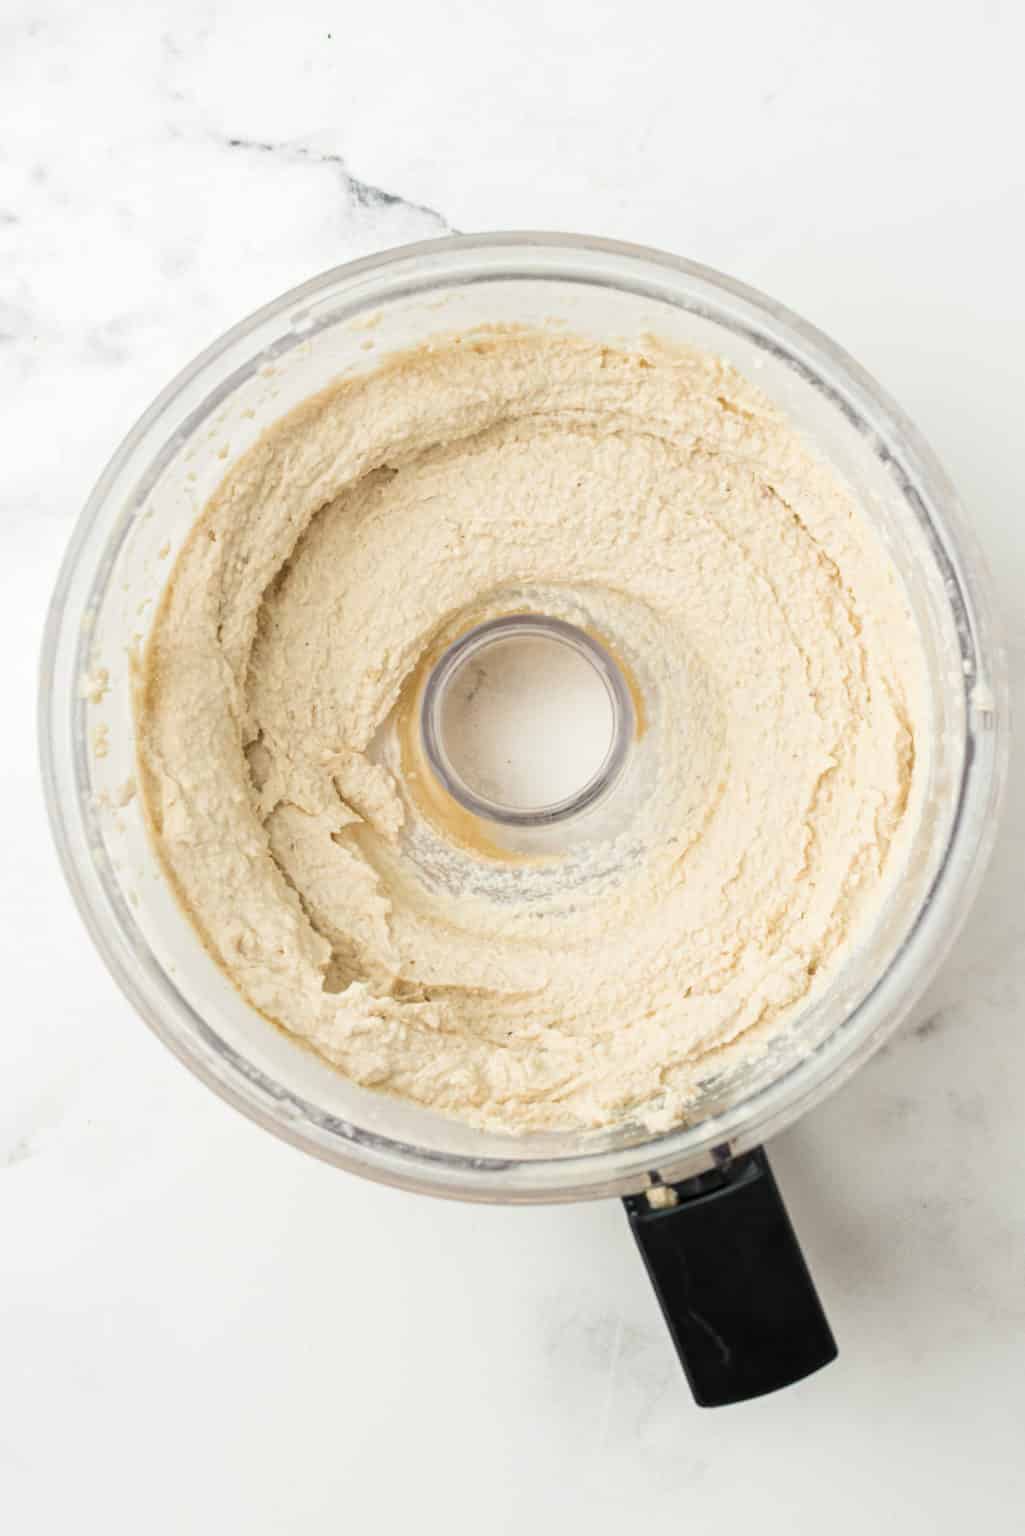 Cashew Hummus Recipe (Legume-Free) - Clean Eating Kitchen